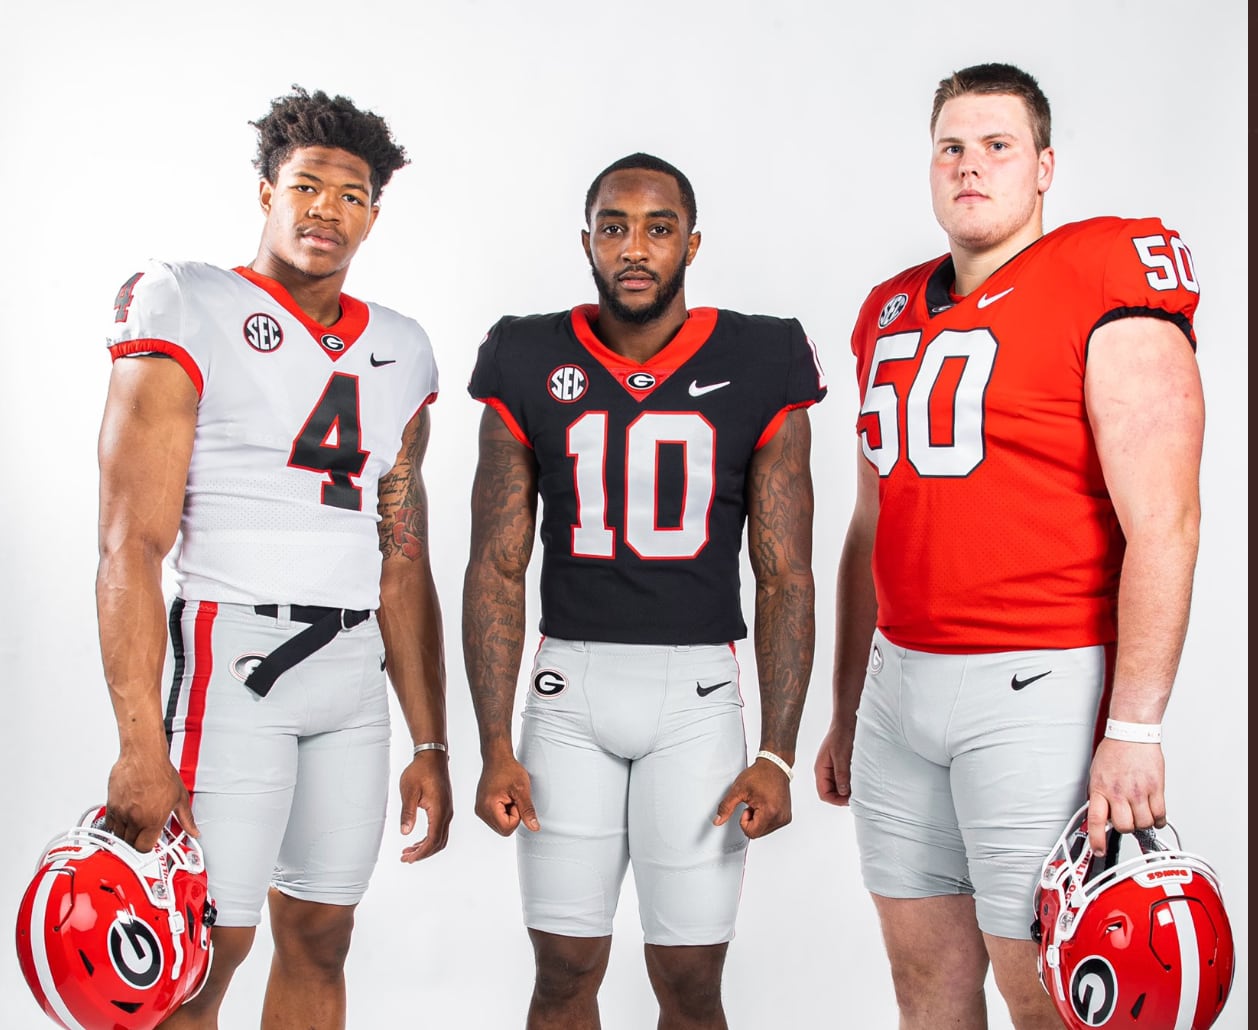 Georgia Bulldogs Return To Block Number Font On Football Uniforms